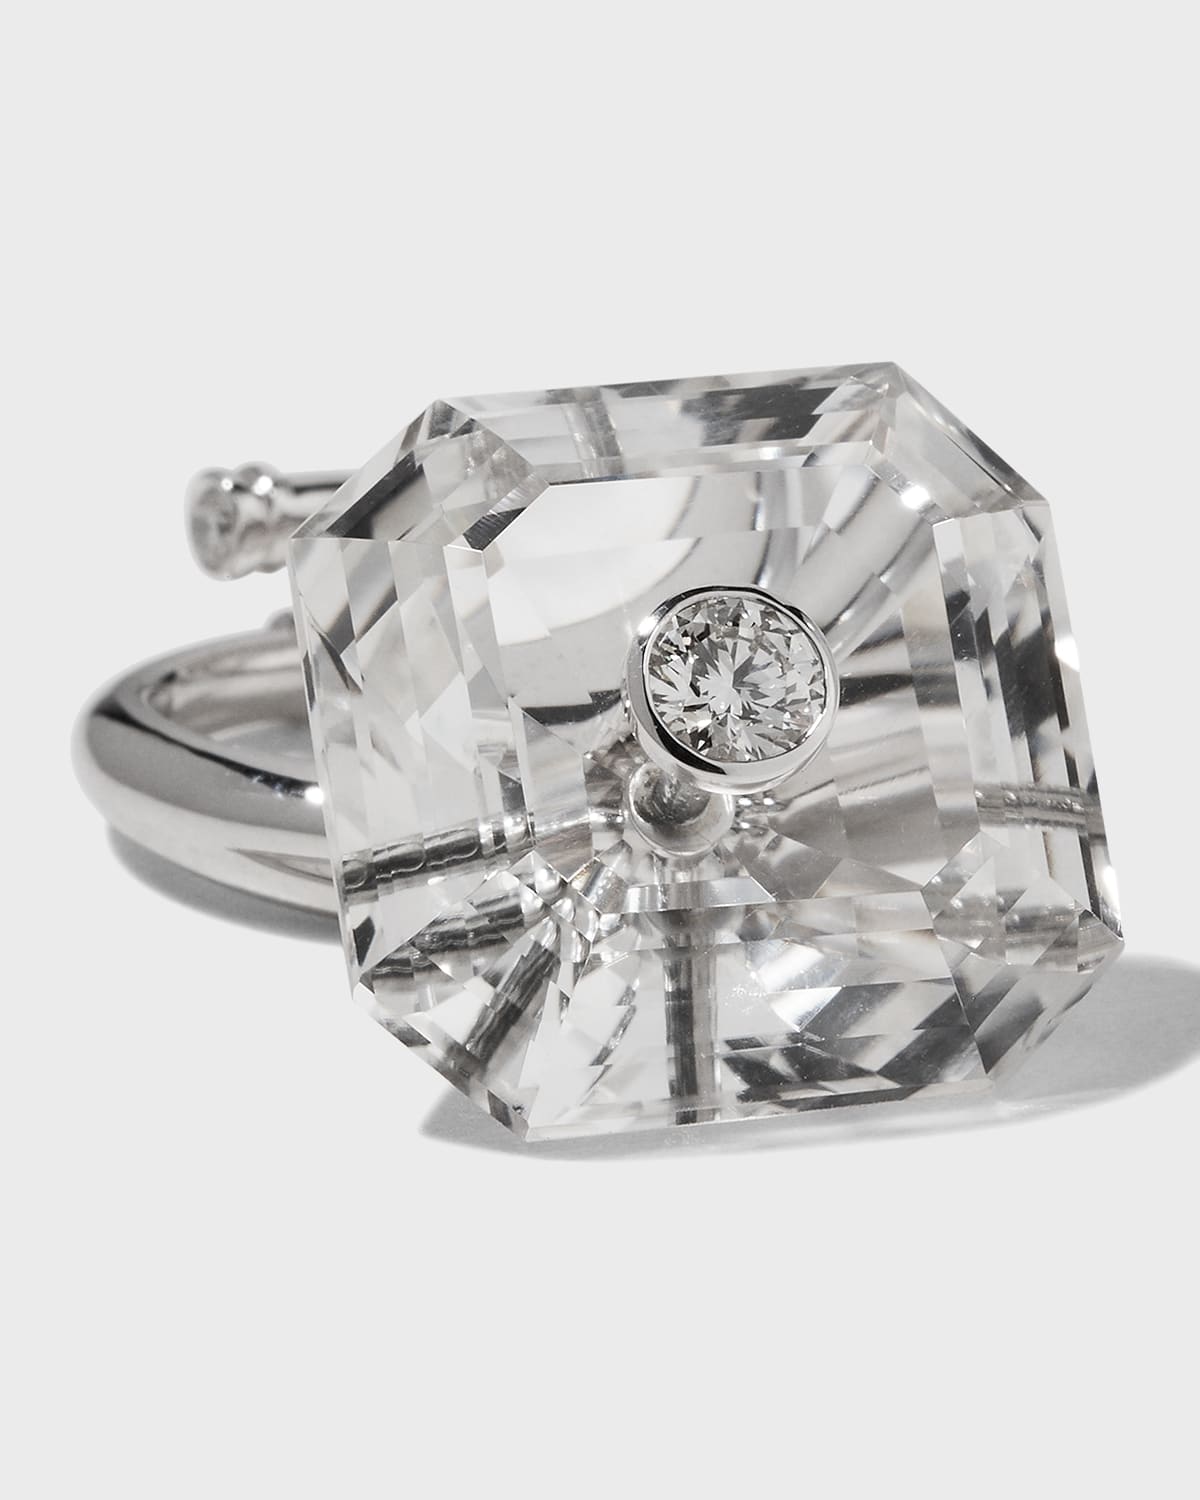 18k White Gold Rock Quartz Ring with Diamonds, Size 5.5